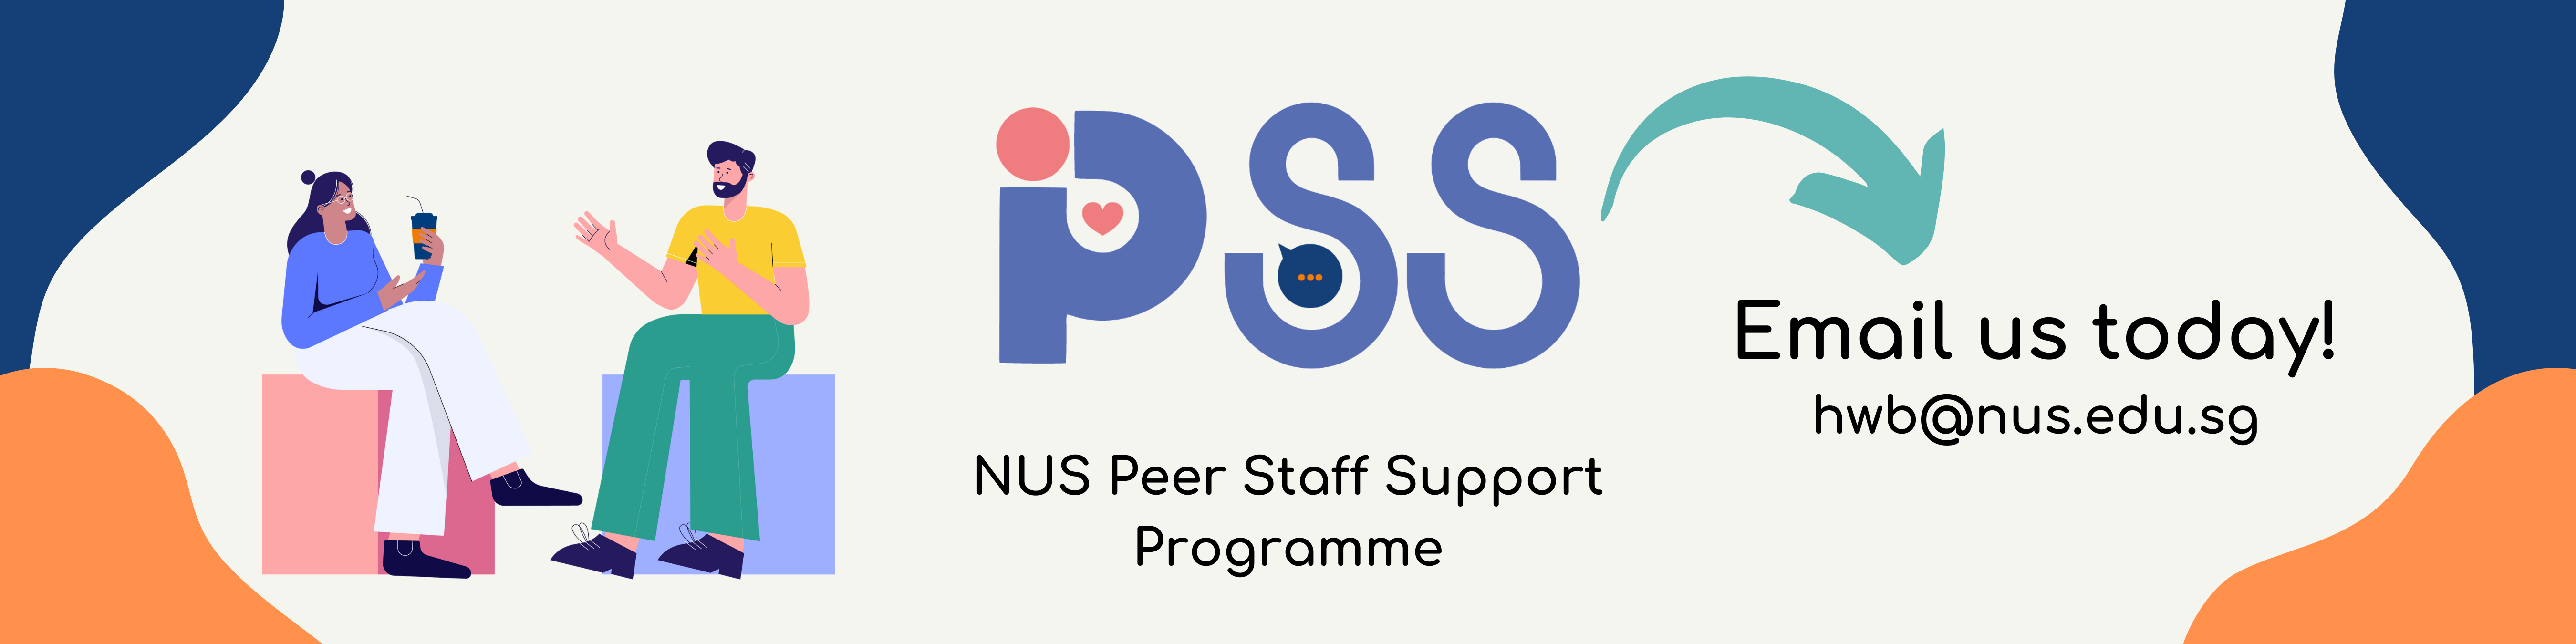 NUS Peer Staff Support Programme